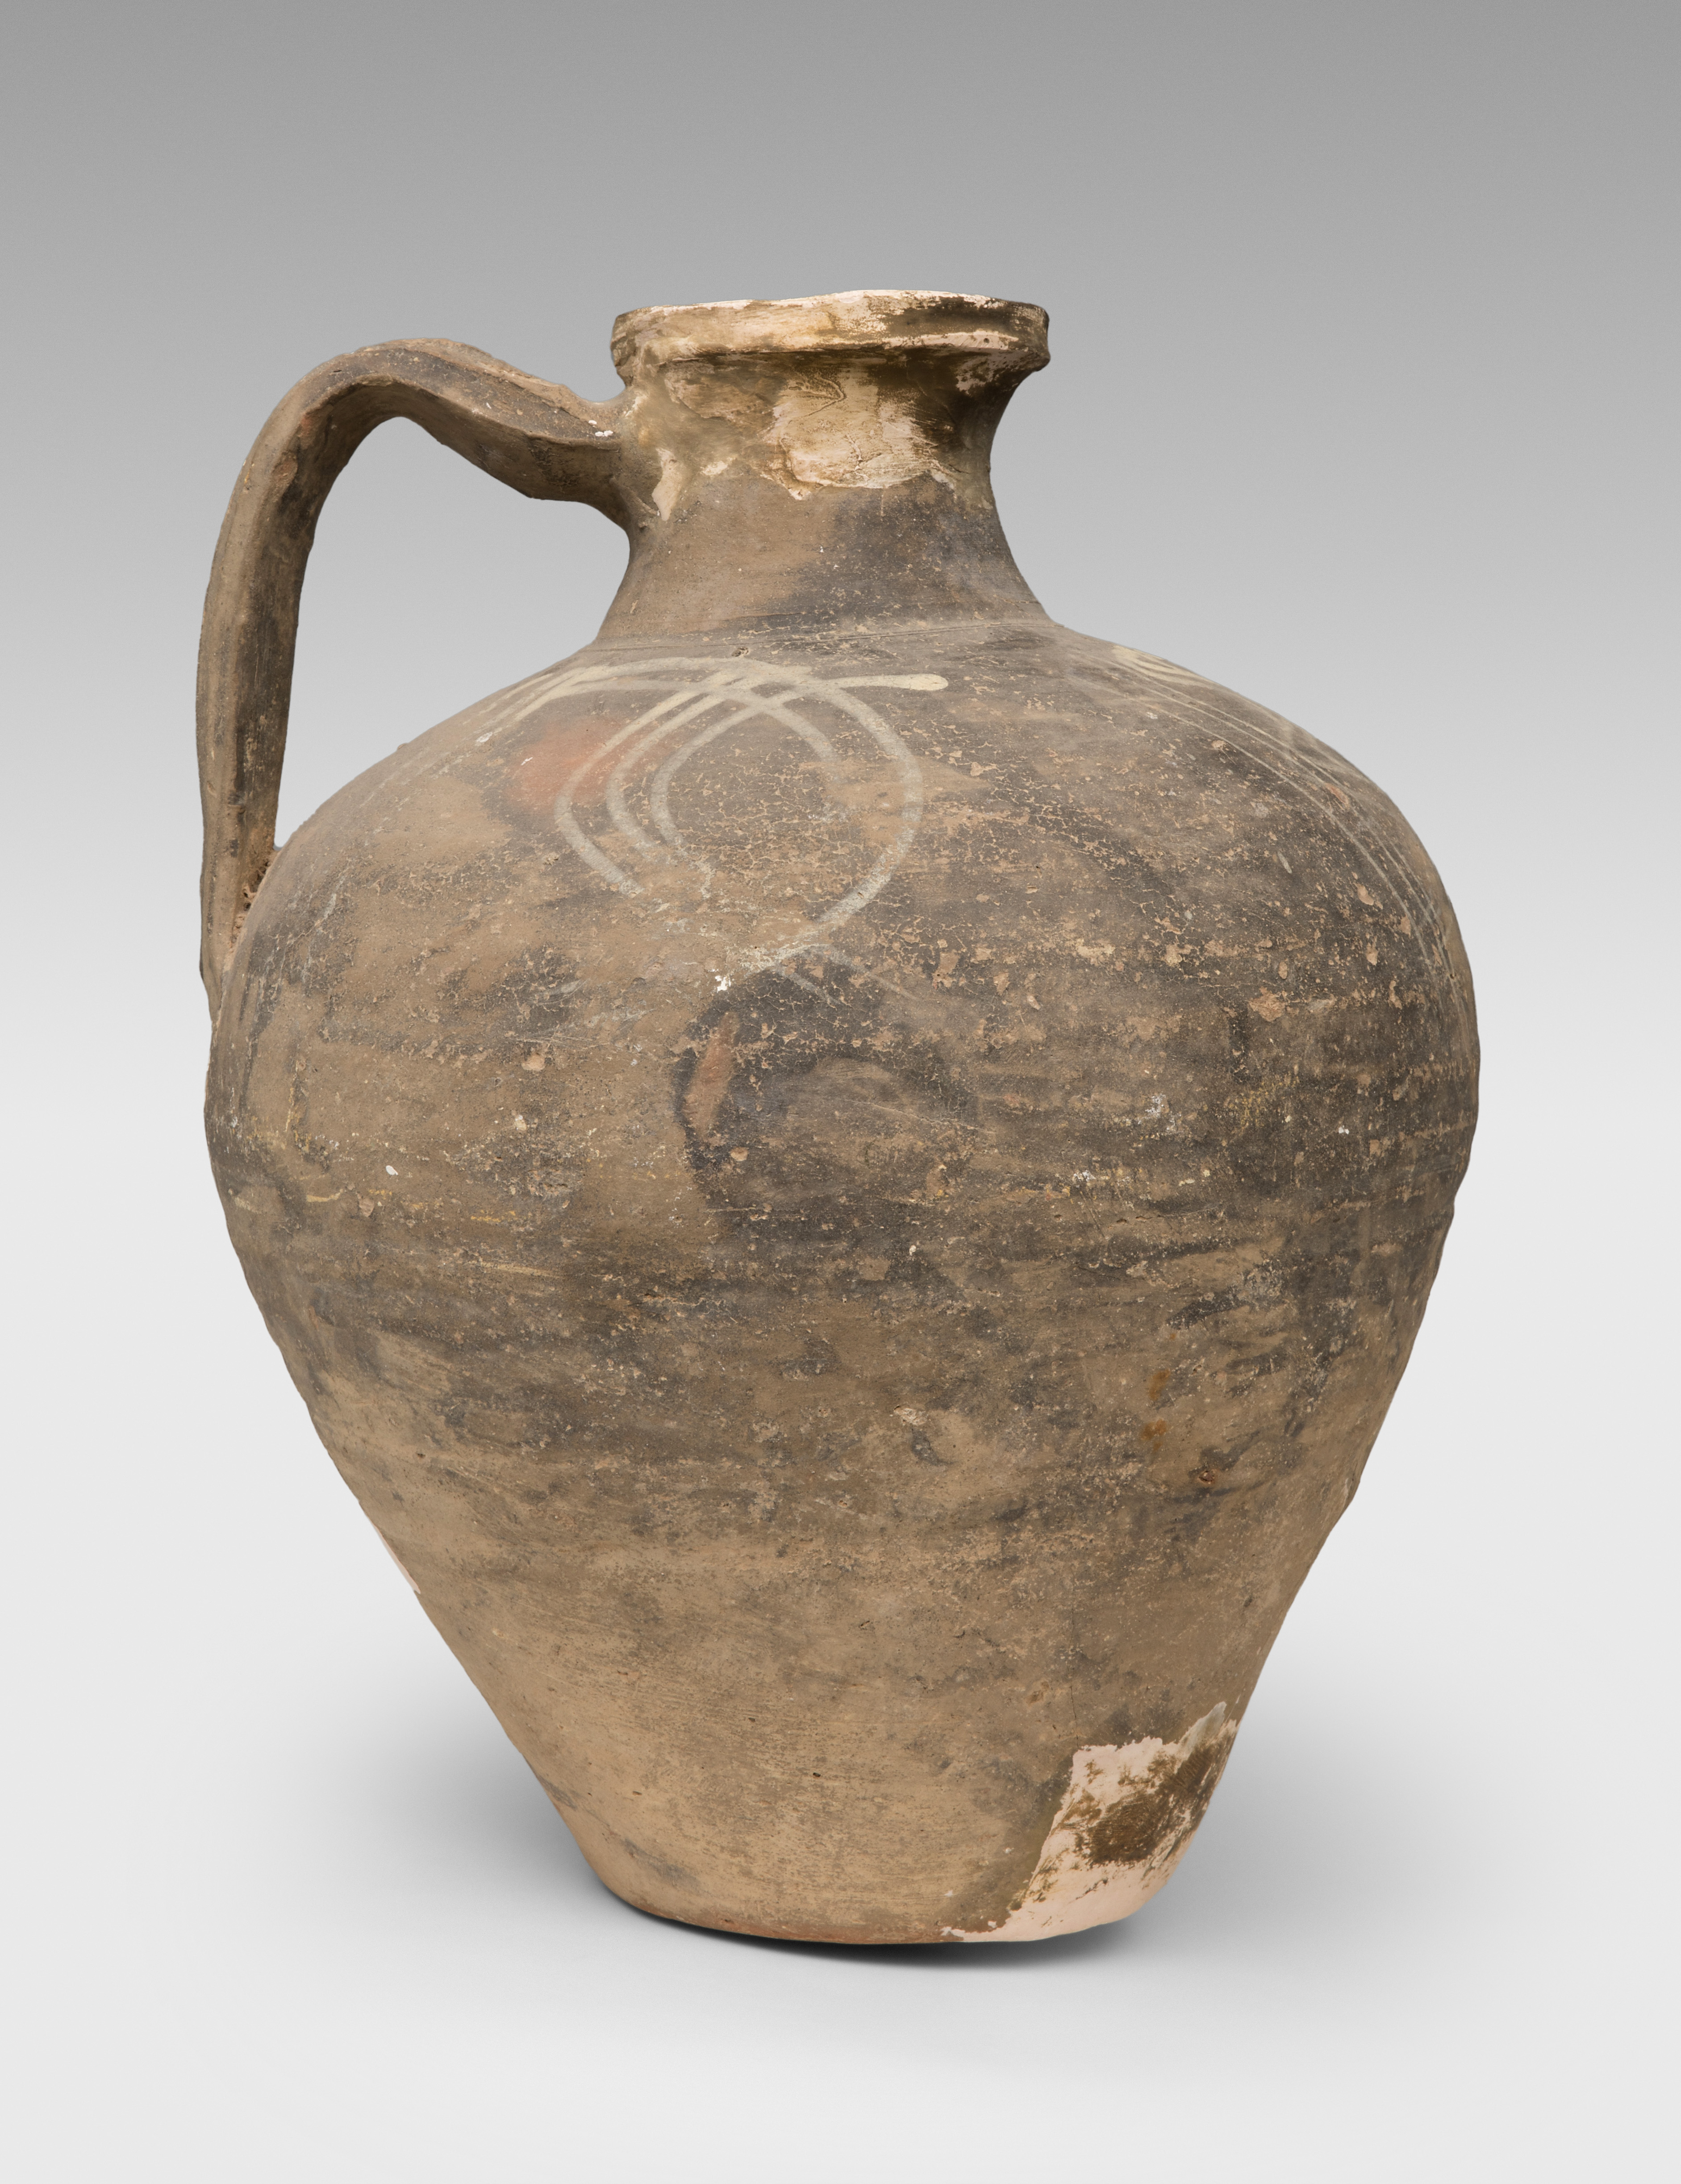 Pitcher; Hispano-Muslim art; Emirate period, 9th-10th century AD. Ceramic. Presents museum - Image 2 of 6